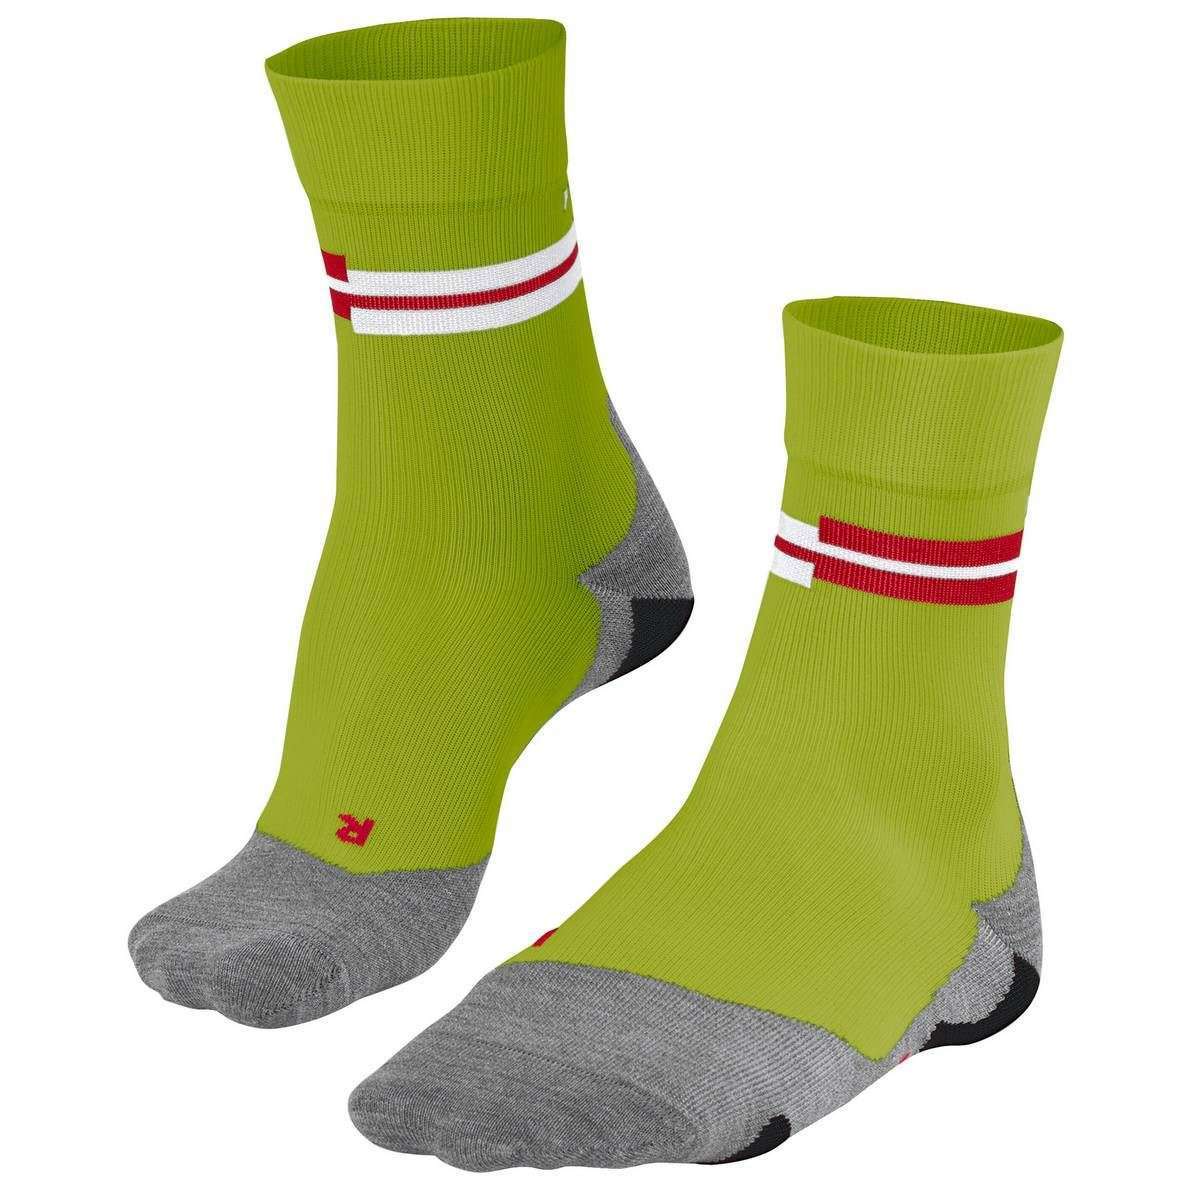 Falke RU5 Race Socks - Lime Green